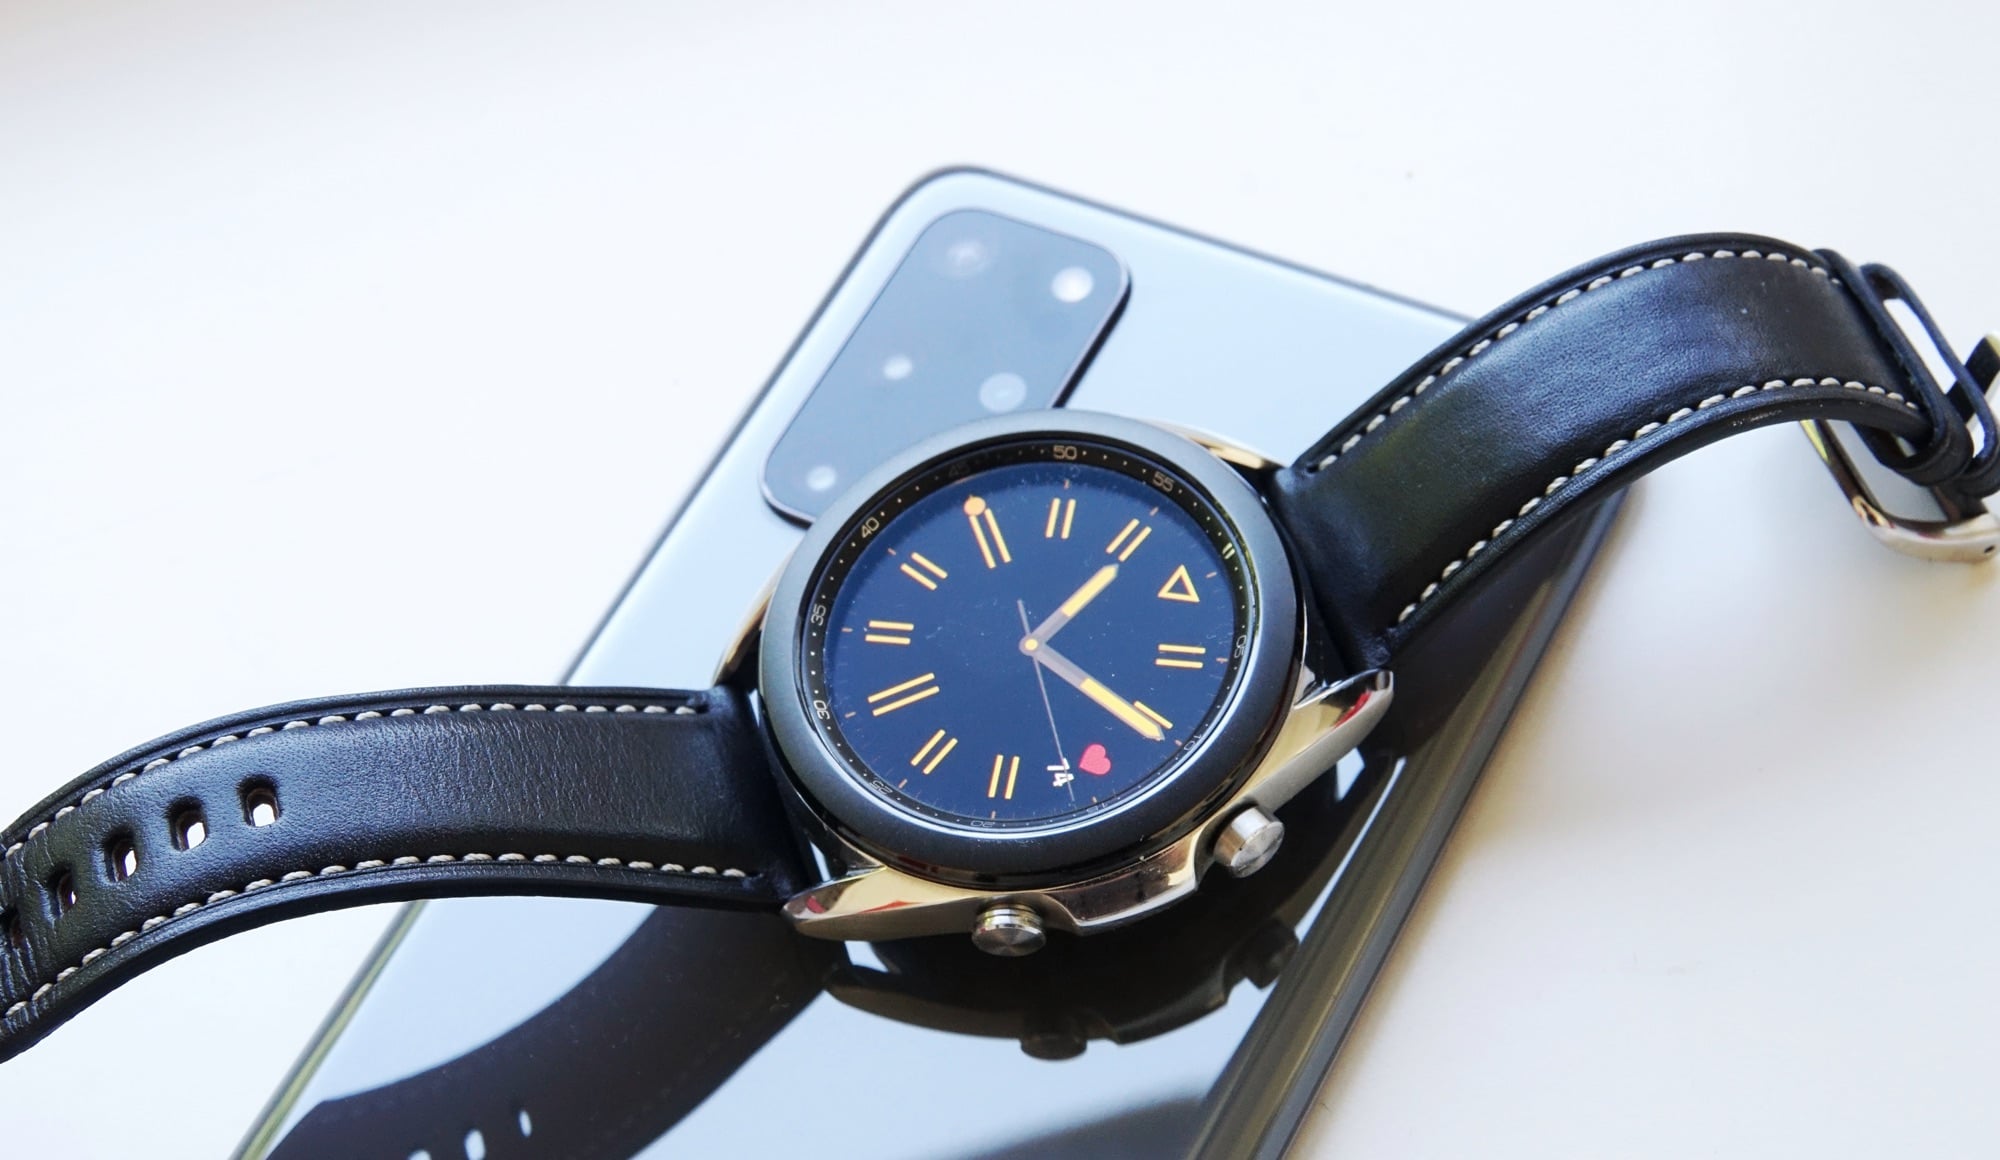 Samsung Galaxy Watch3 on the Samsung Galaxy S20+